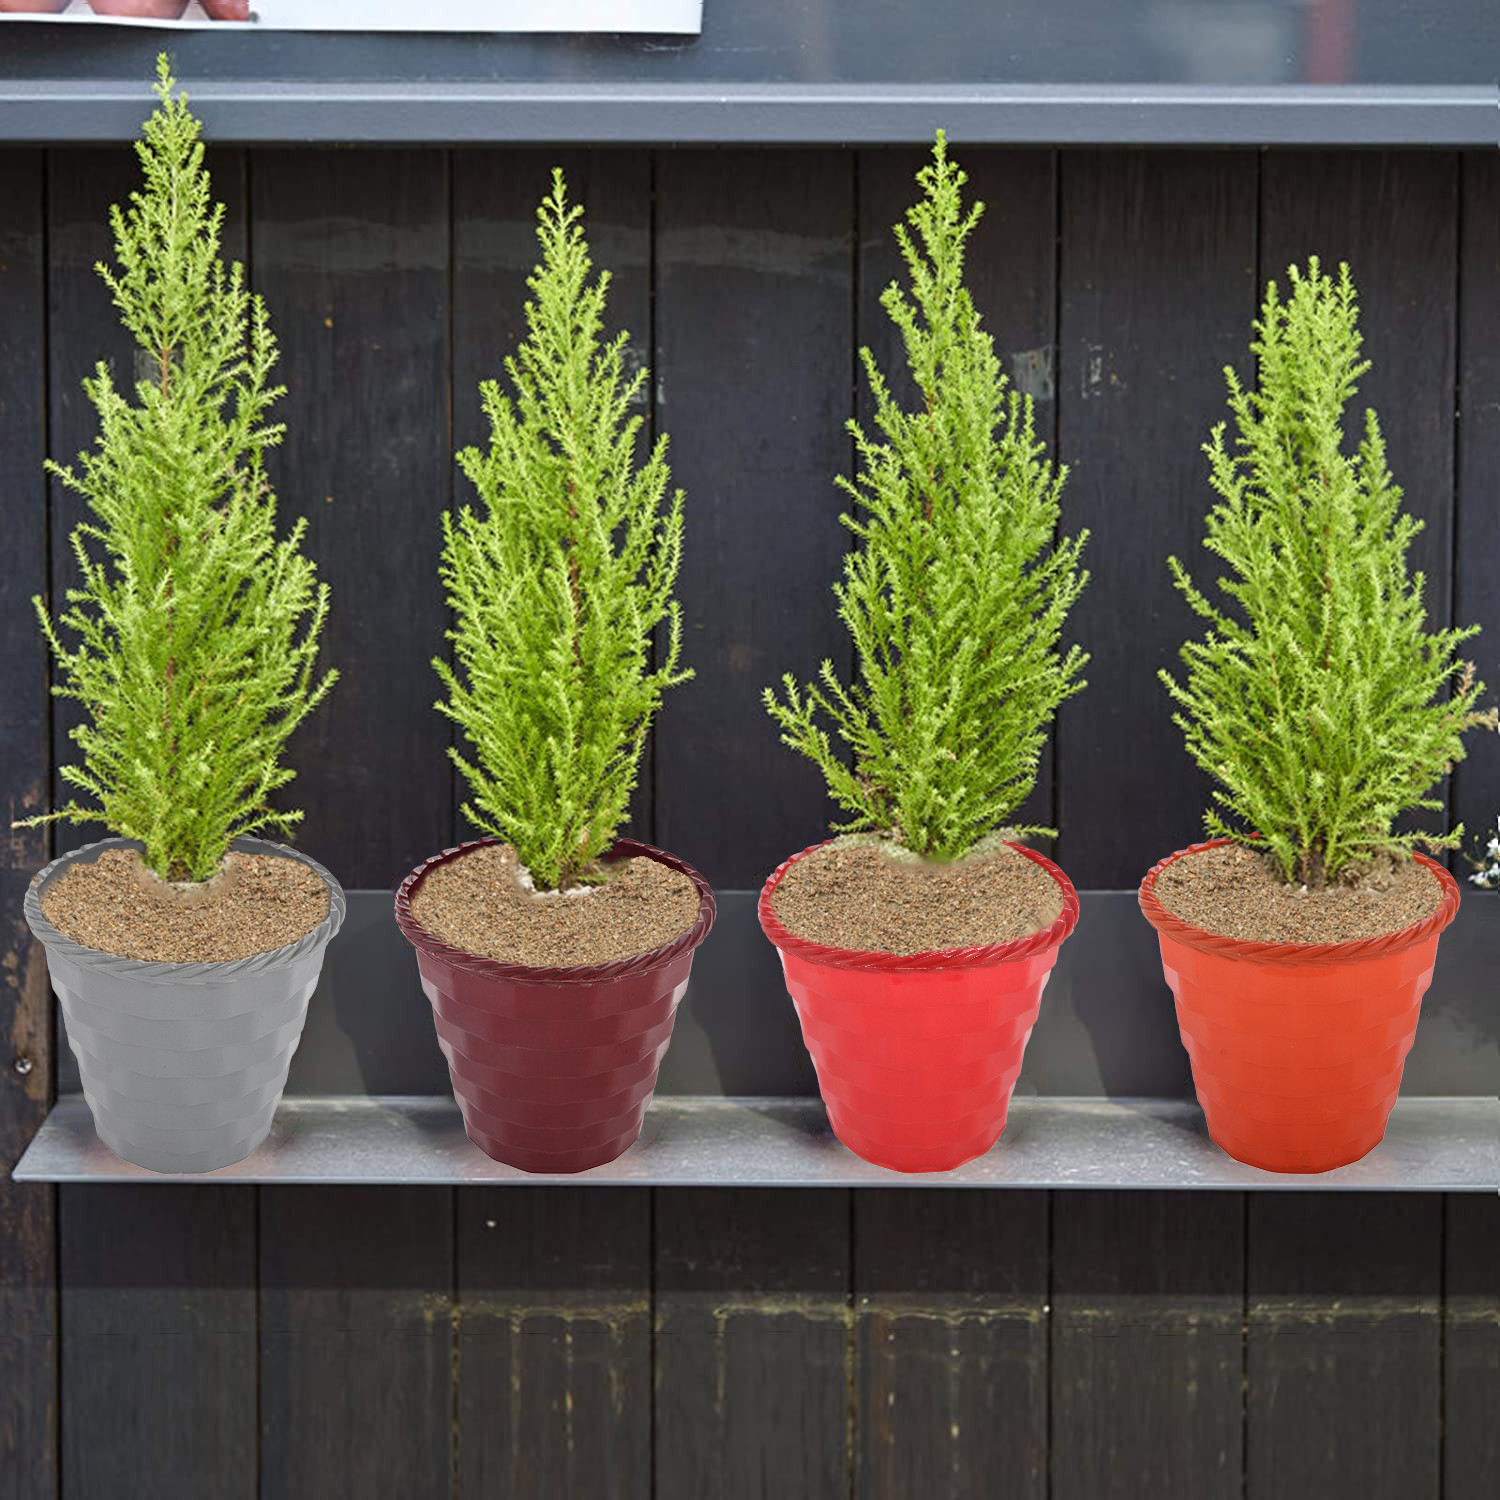 Kuber Industries Brick Flower Pot|Durable Plastic Flower Pots|Planters for Home Décor|Garden|Living Room|Balcony|6 Inch|Pack of 2 (Red & Orange)